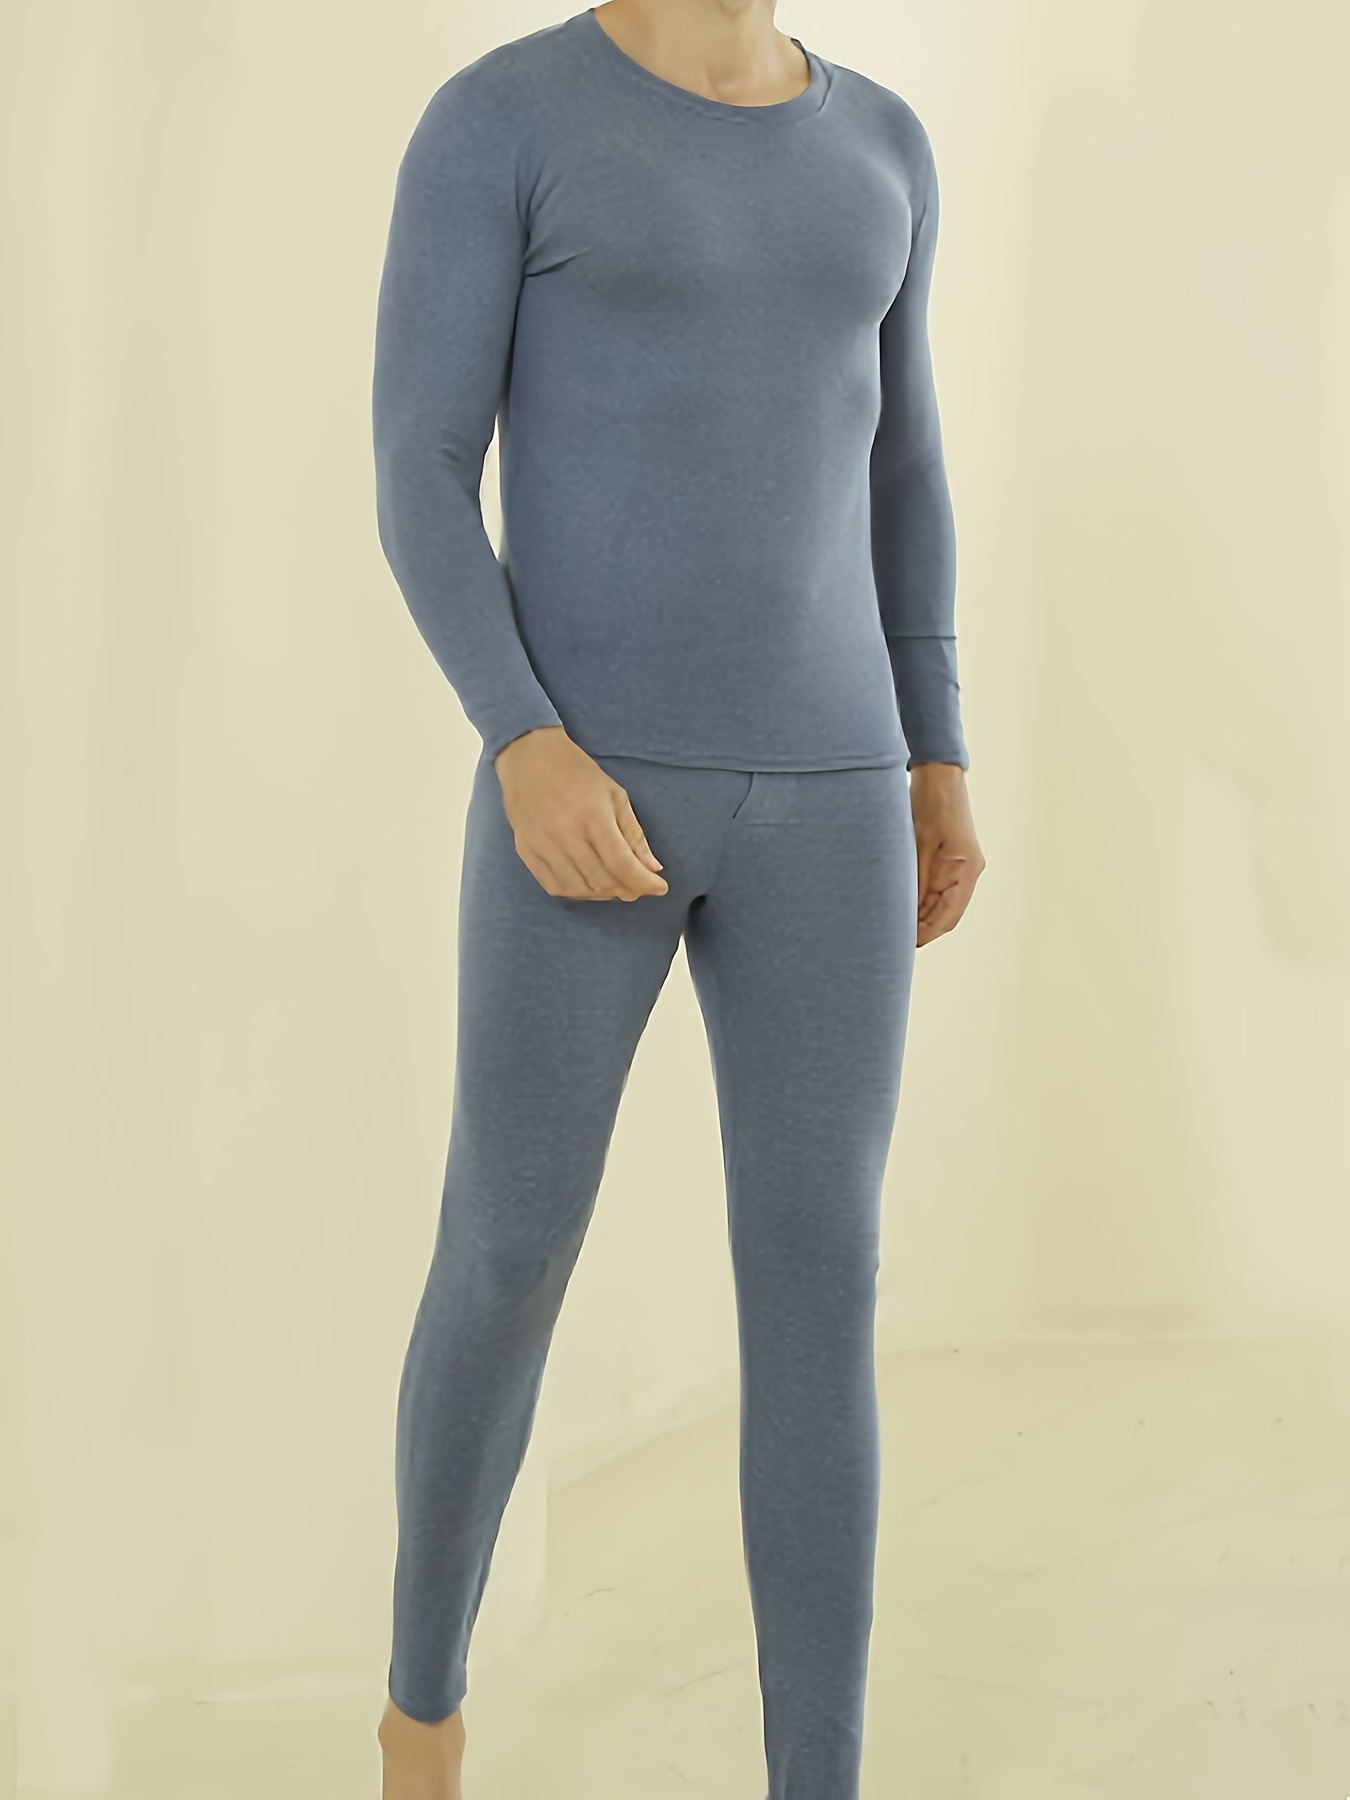 Mens's Long Johns Thermal Underwear Set 'cushy' - blue